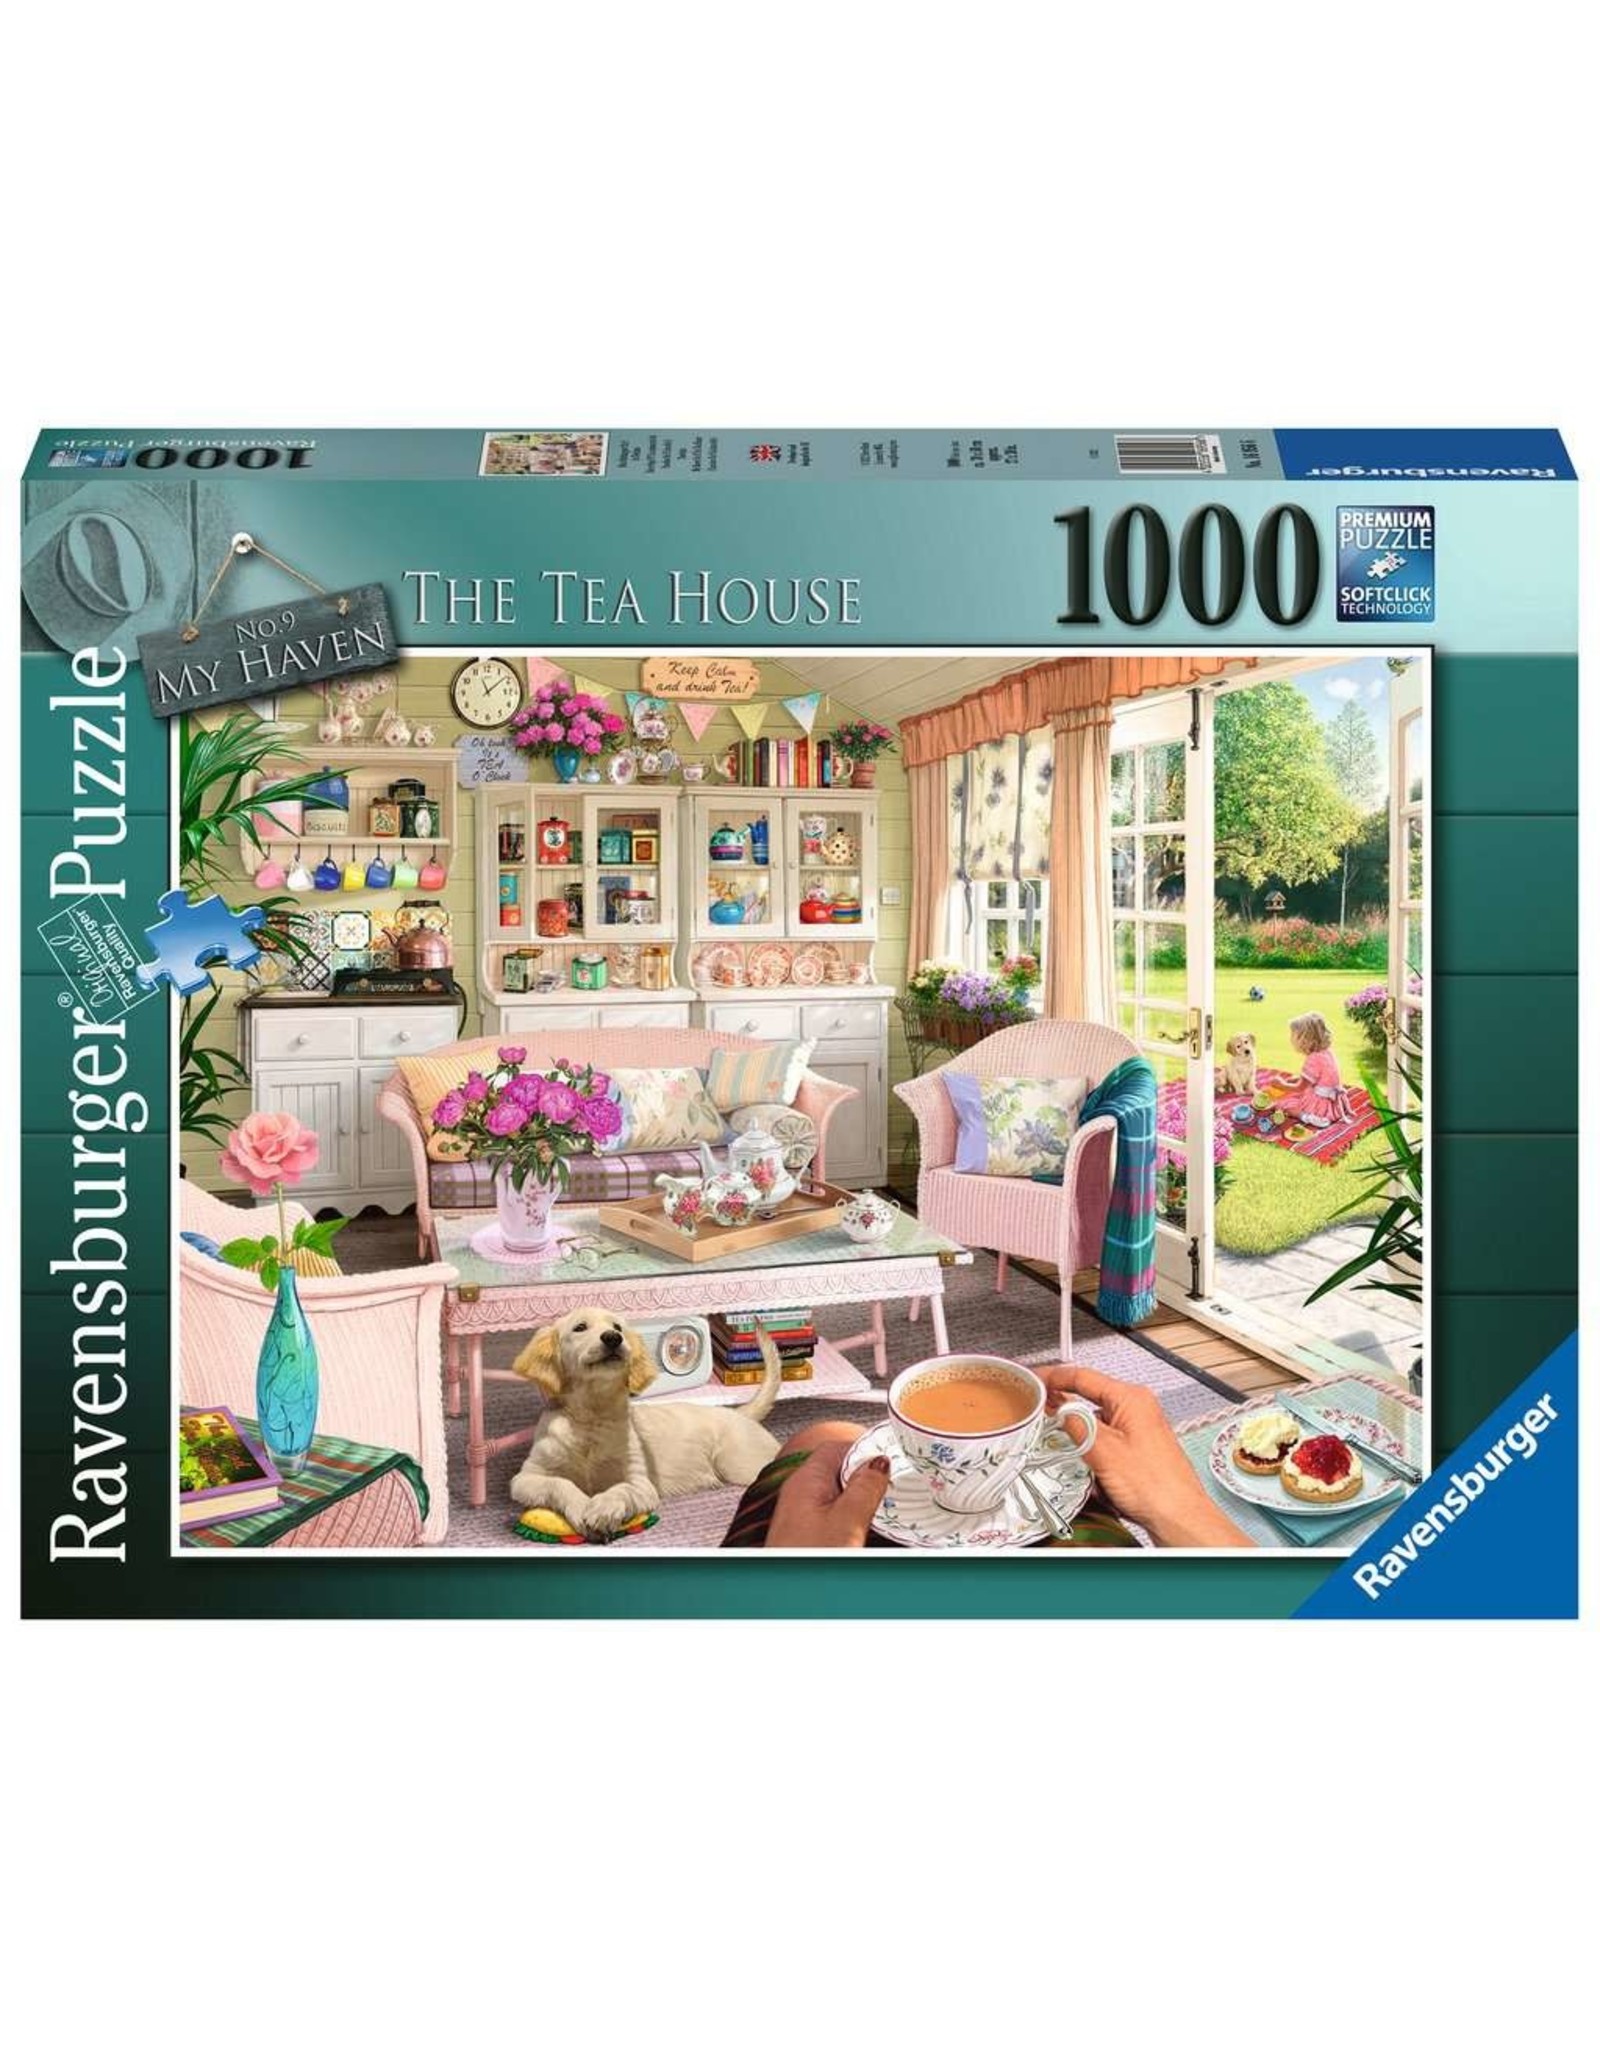 Ravensburger Puzzle Ravensburger 1000 pcs - My haven No. 9 The tea house